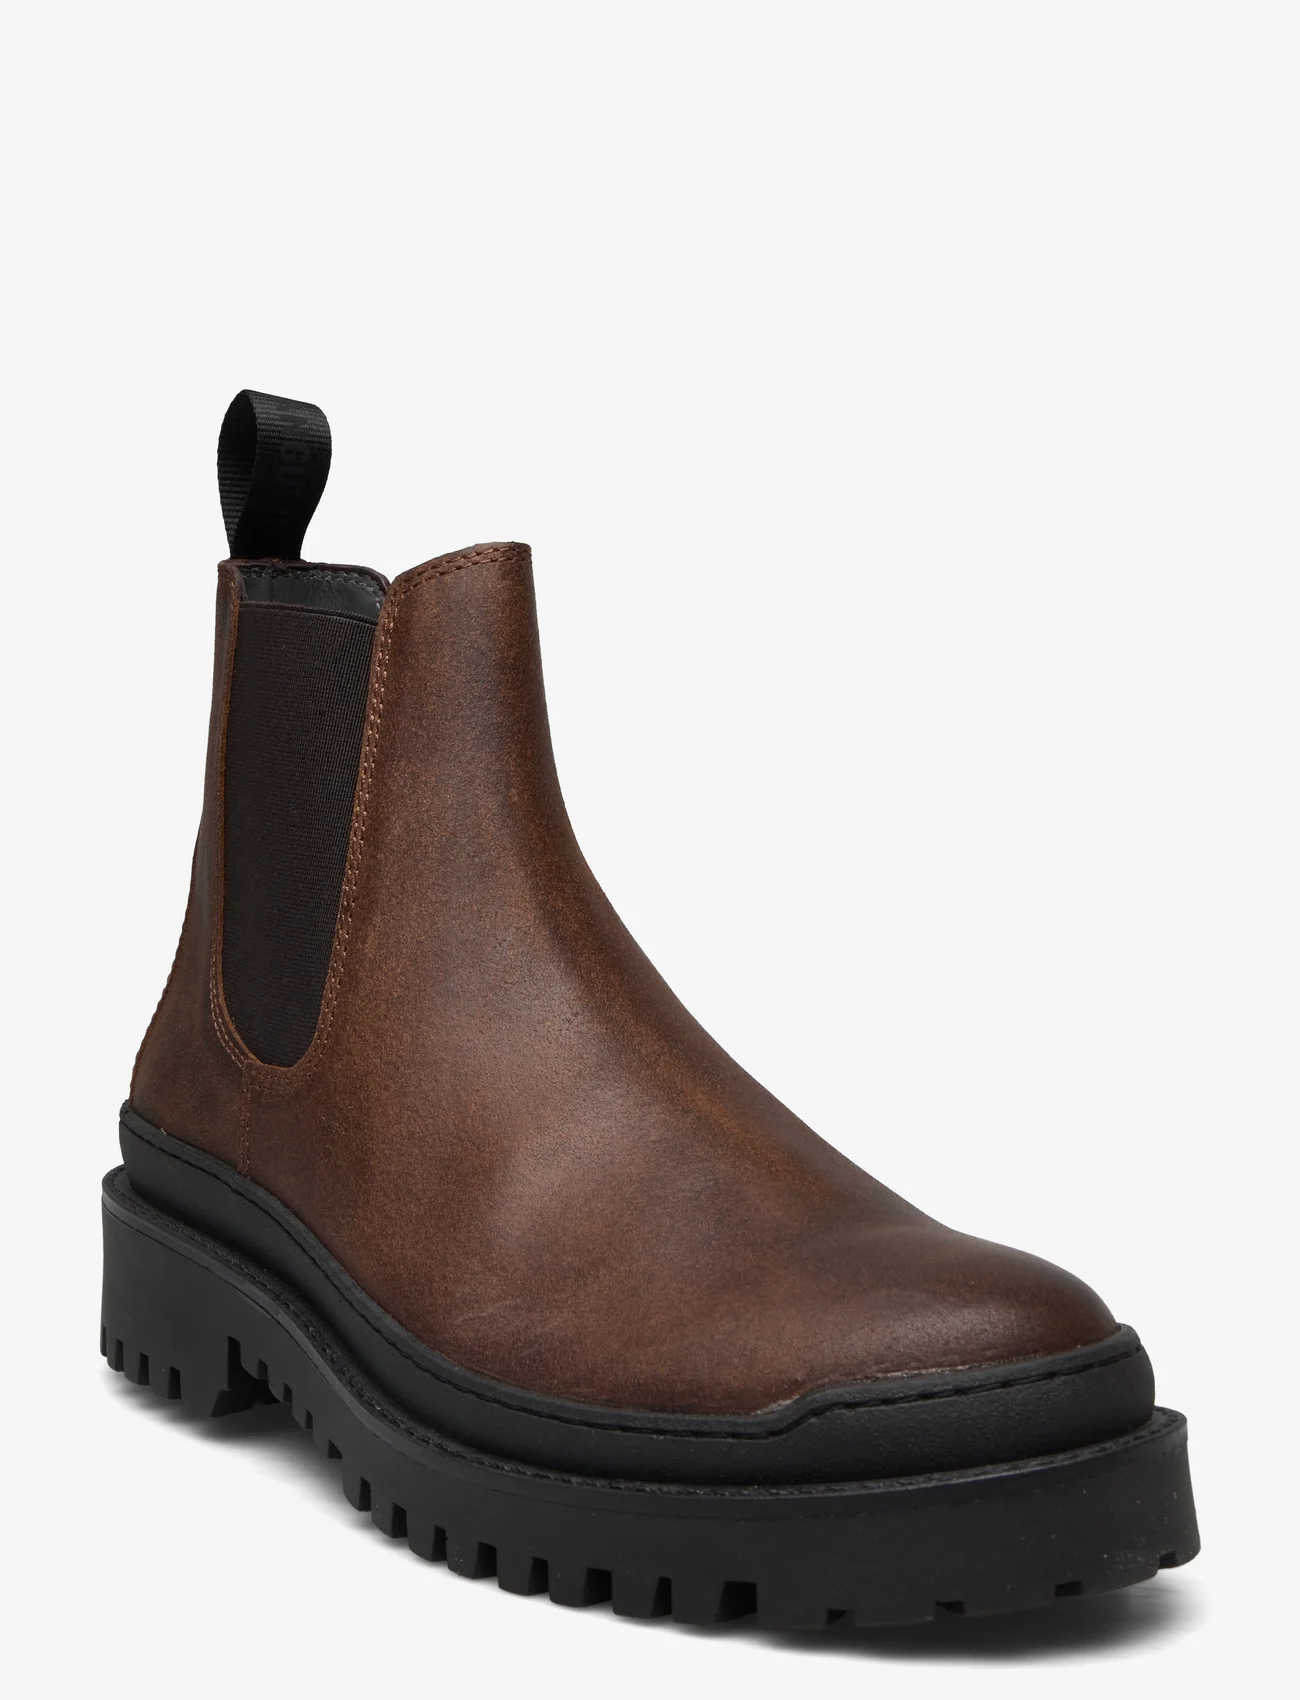 ANGULUS - Boots - flat - fødselsdagsgaver - 2108/002 brown/brown - 0